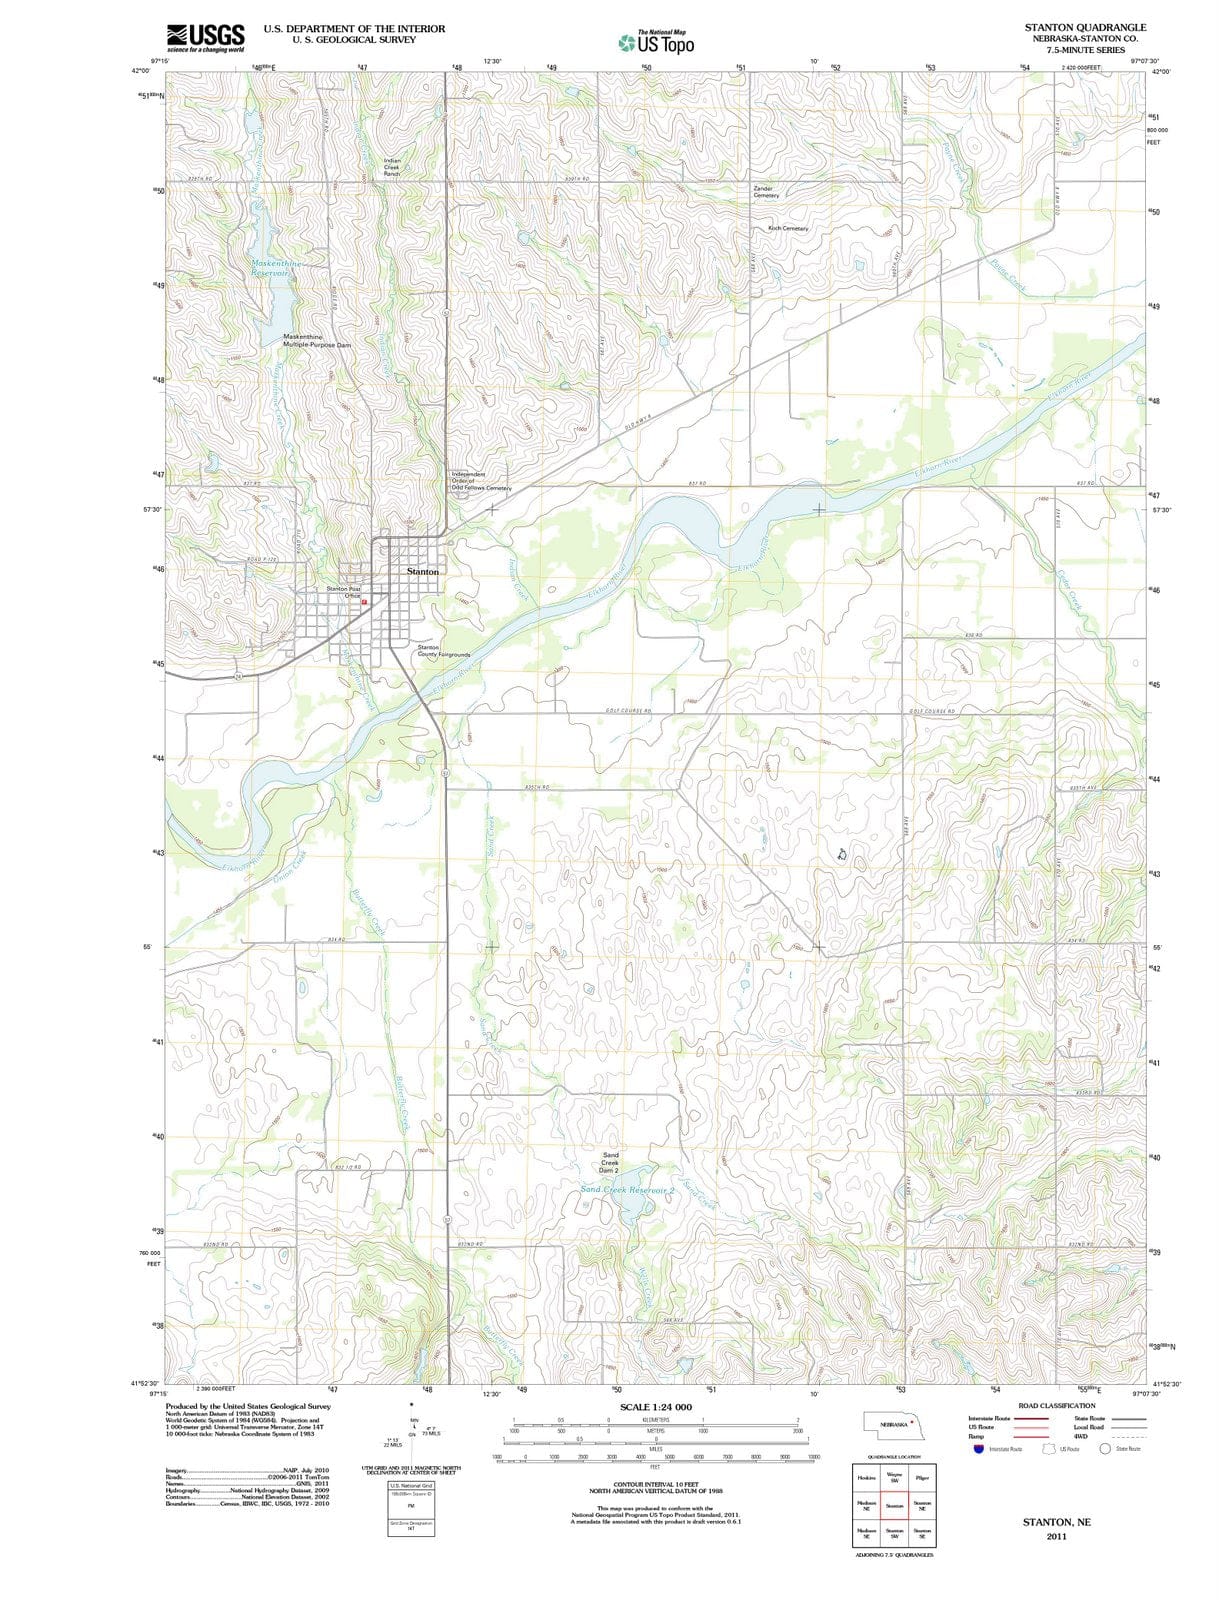 2011 Stanton, NE - Nebraska - USGS Topographic Map